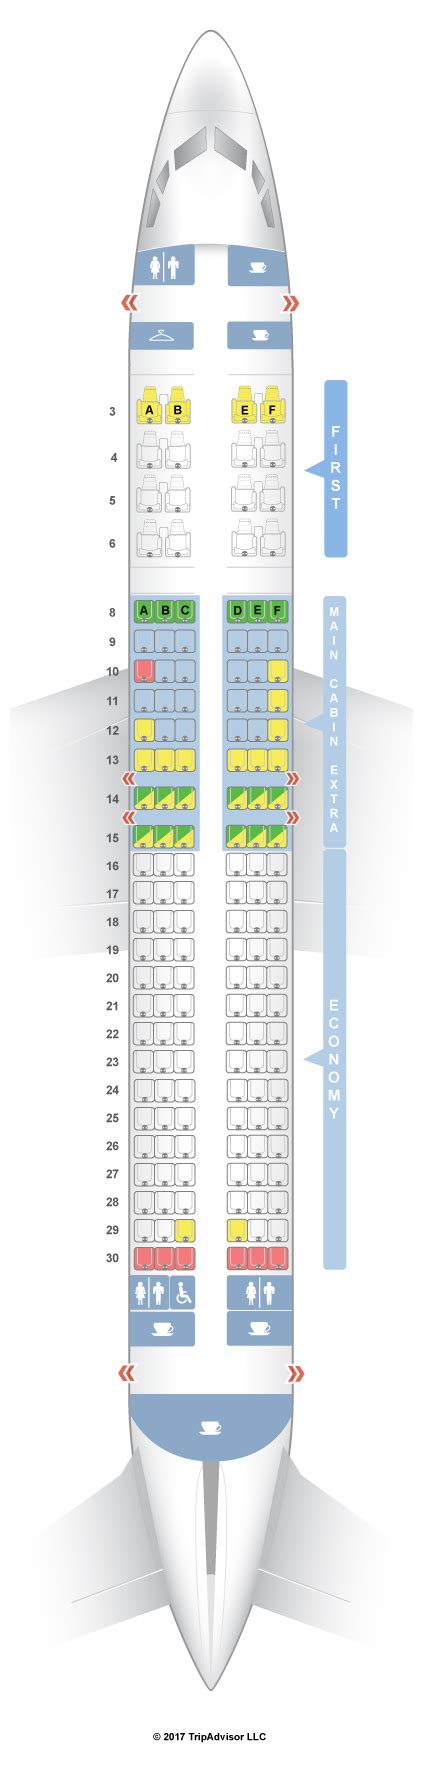 Seatguru Seat Map American Airlines Boeing 737 800 738 V1